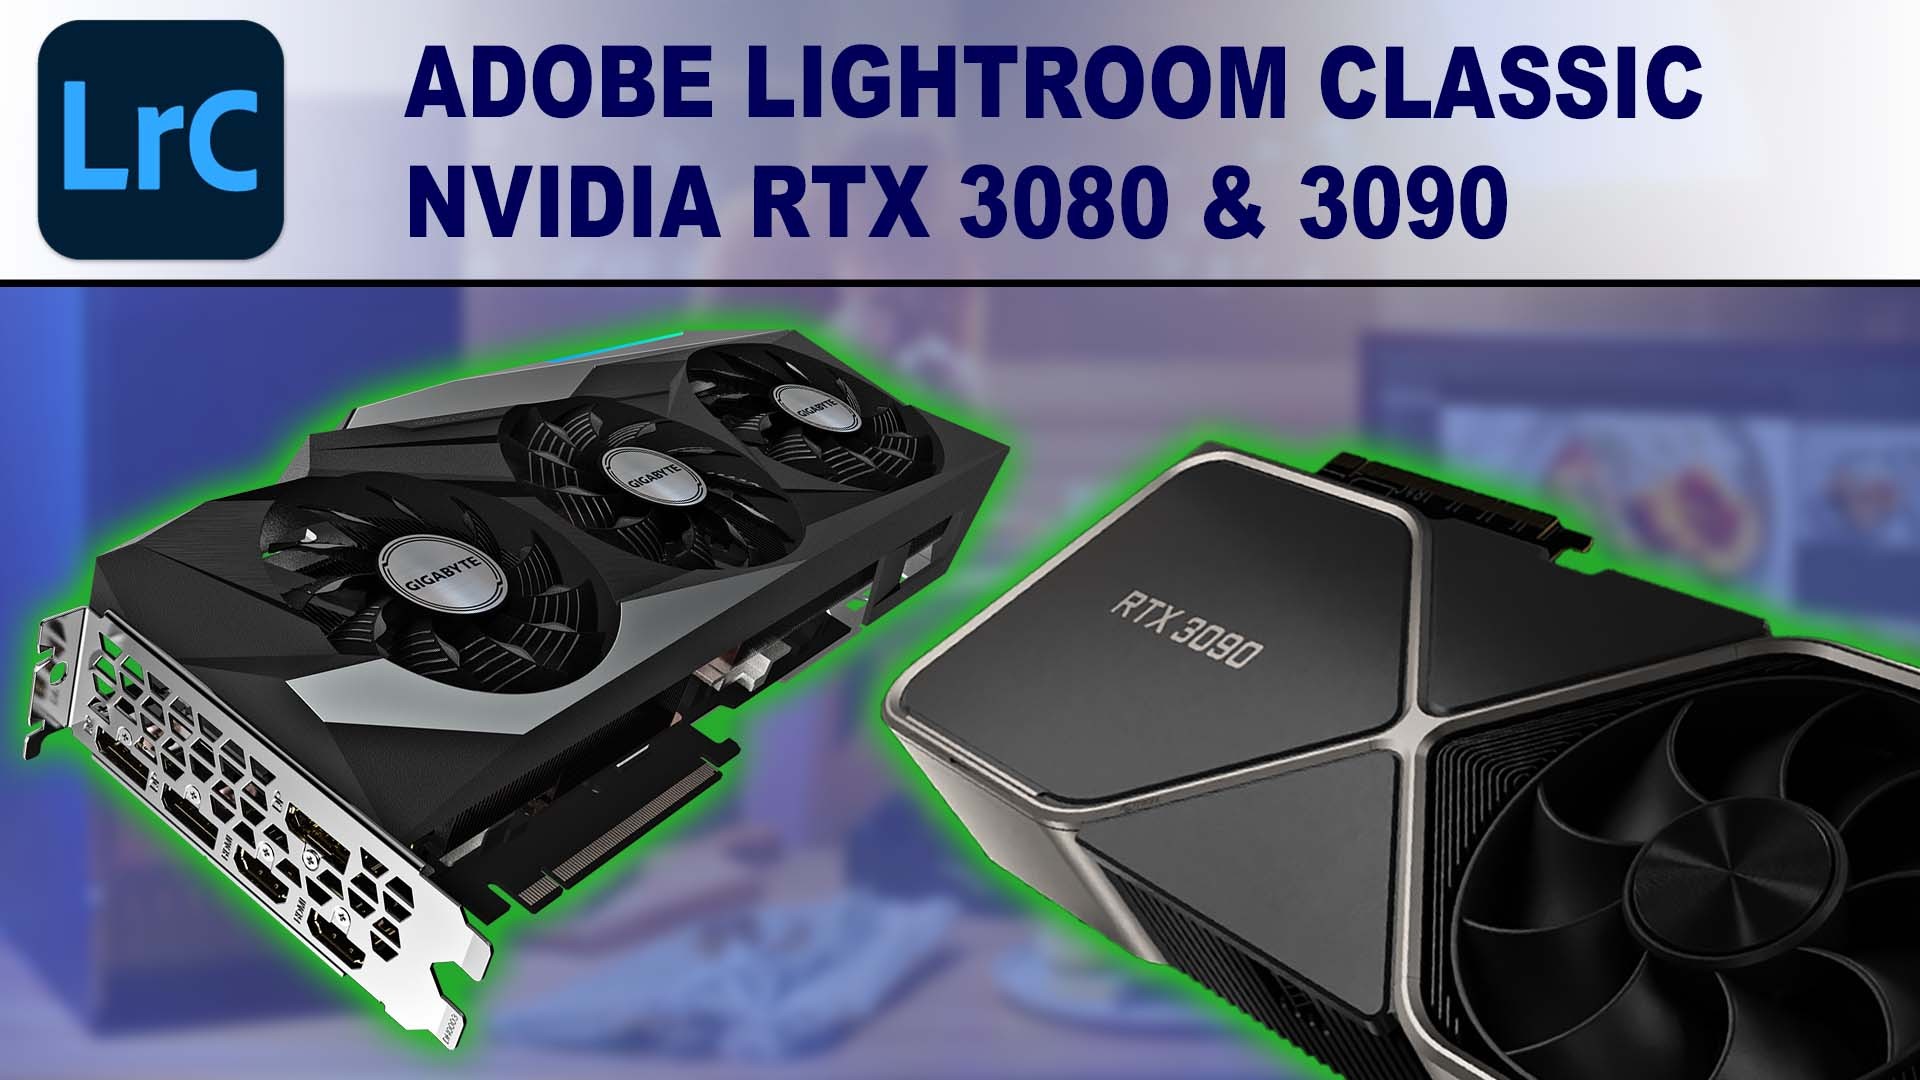 Lightroom Classic GPU Performance Benchmark - NVIDIA GeForce RTX 3080 10GB & RTX 3090 24GB